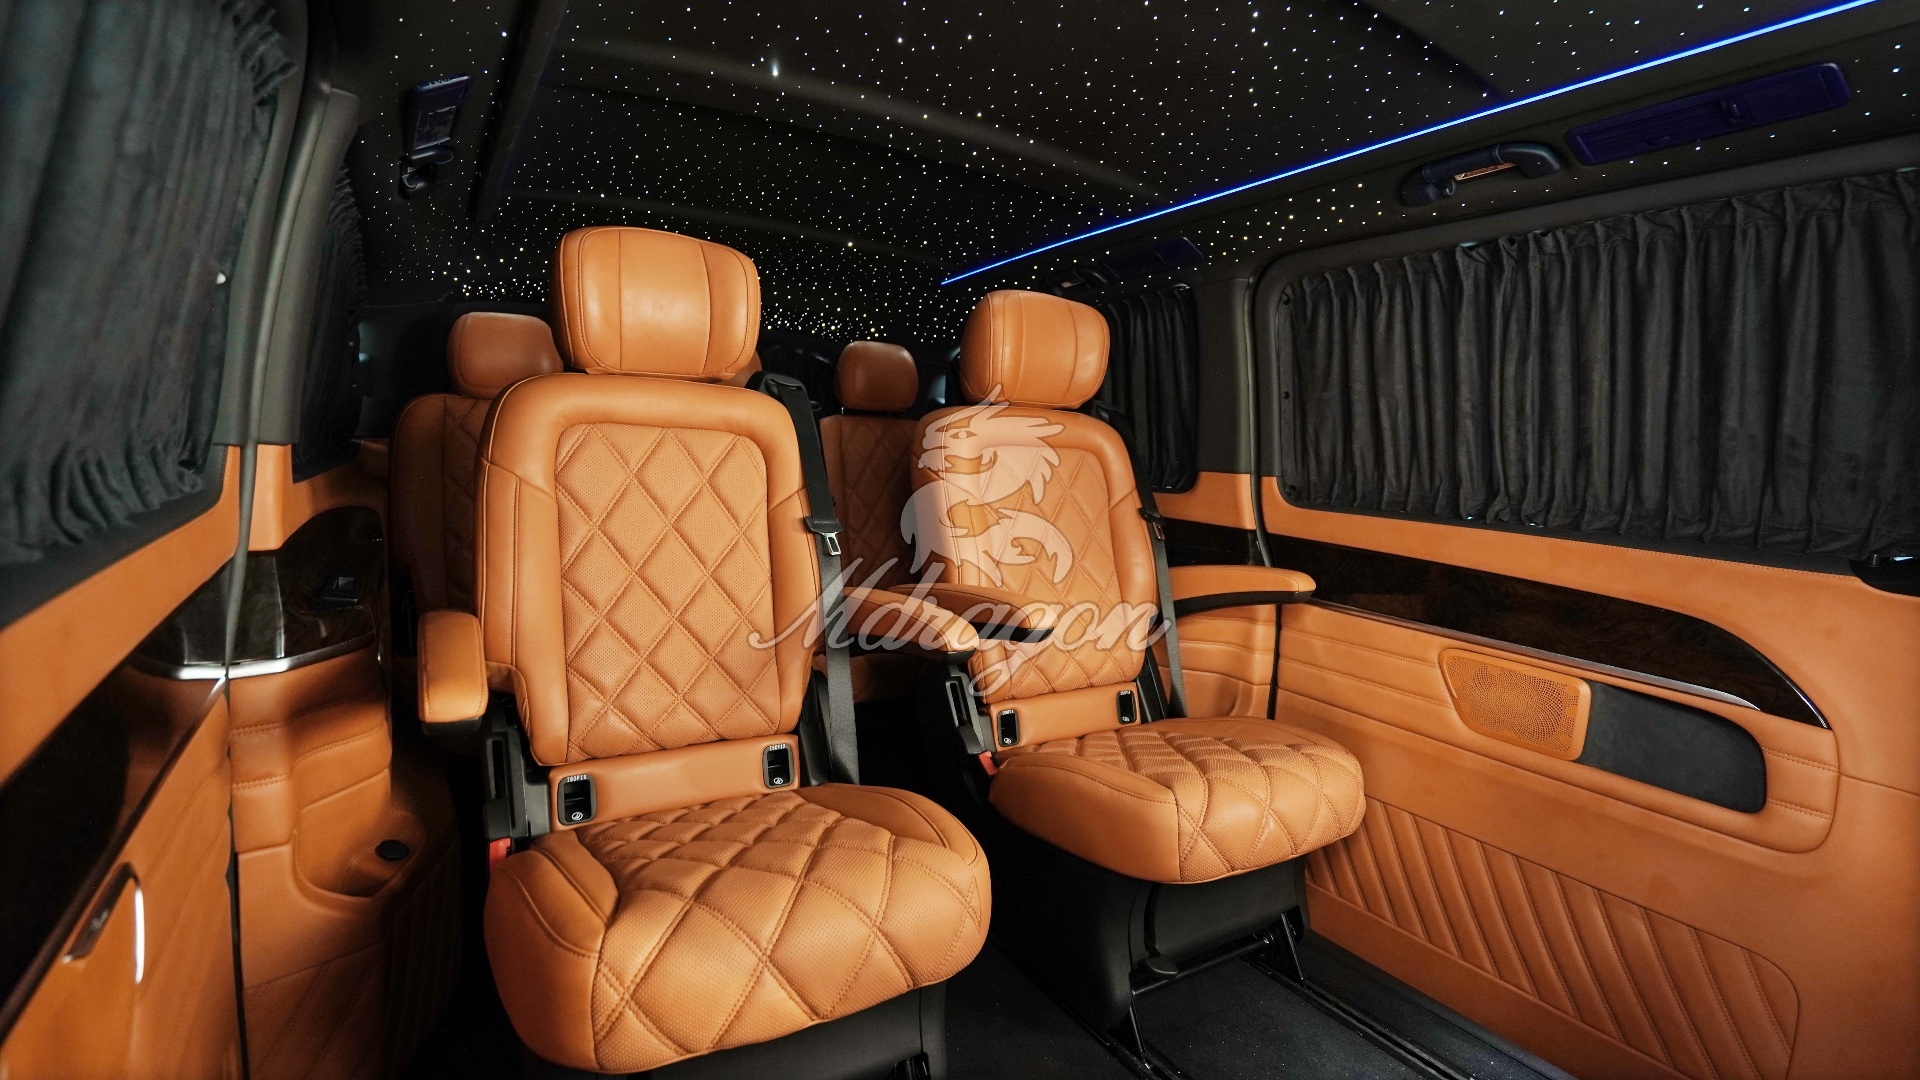 A Program-Mercedes Benz Vito 7 Seats Interior Modification